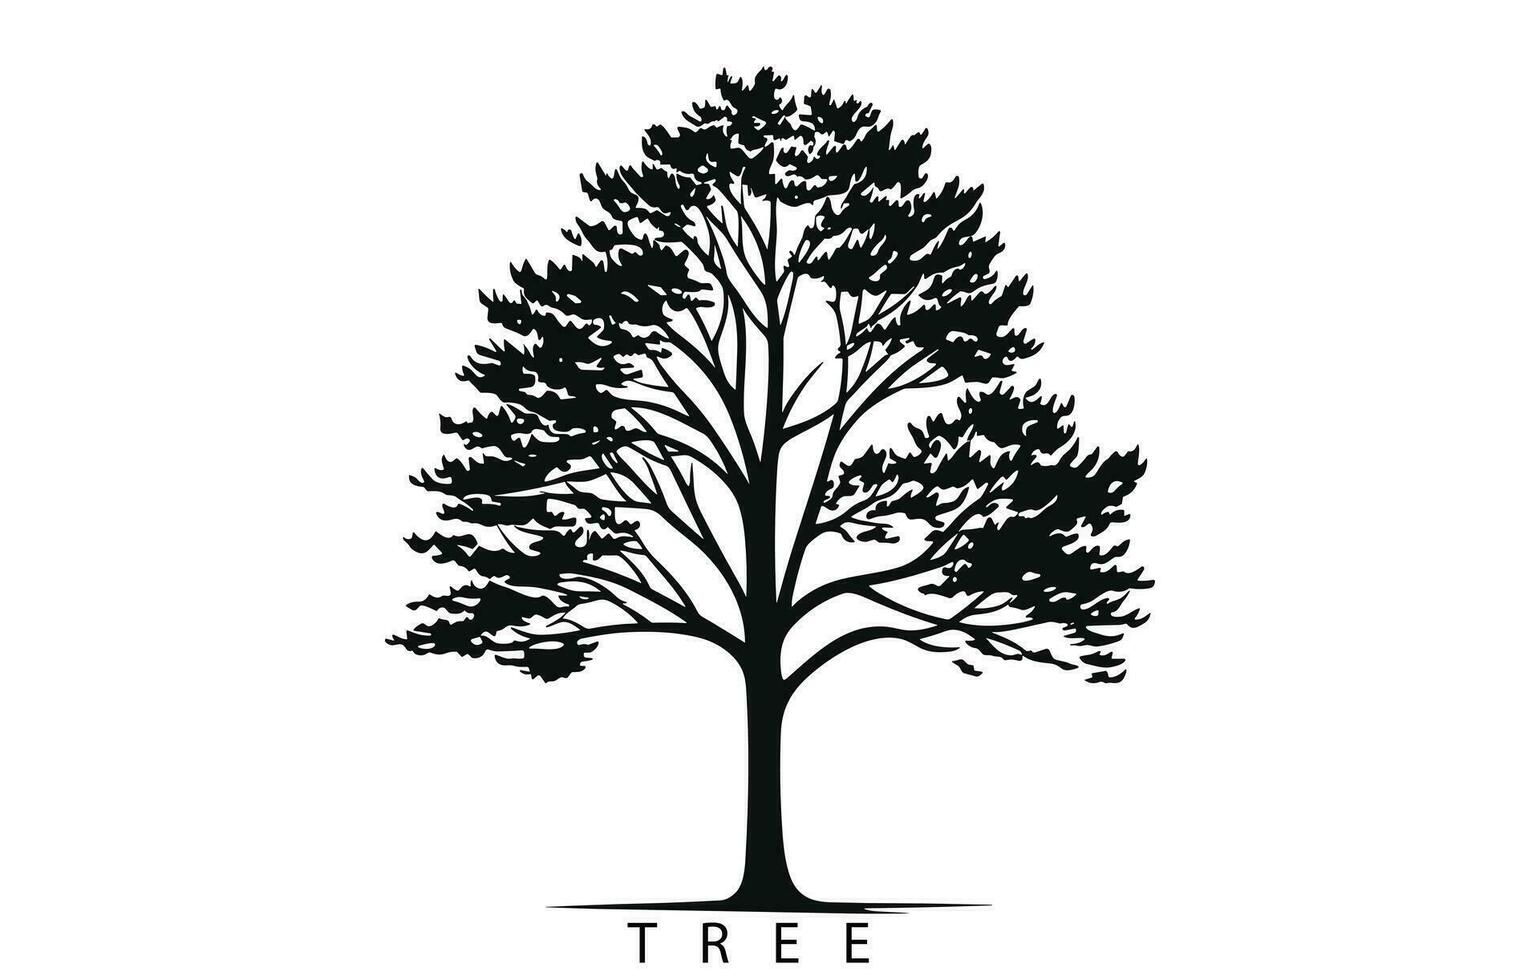 árbol siluetas vector ilustración, árbol silueta aislado en blanco antecedentes